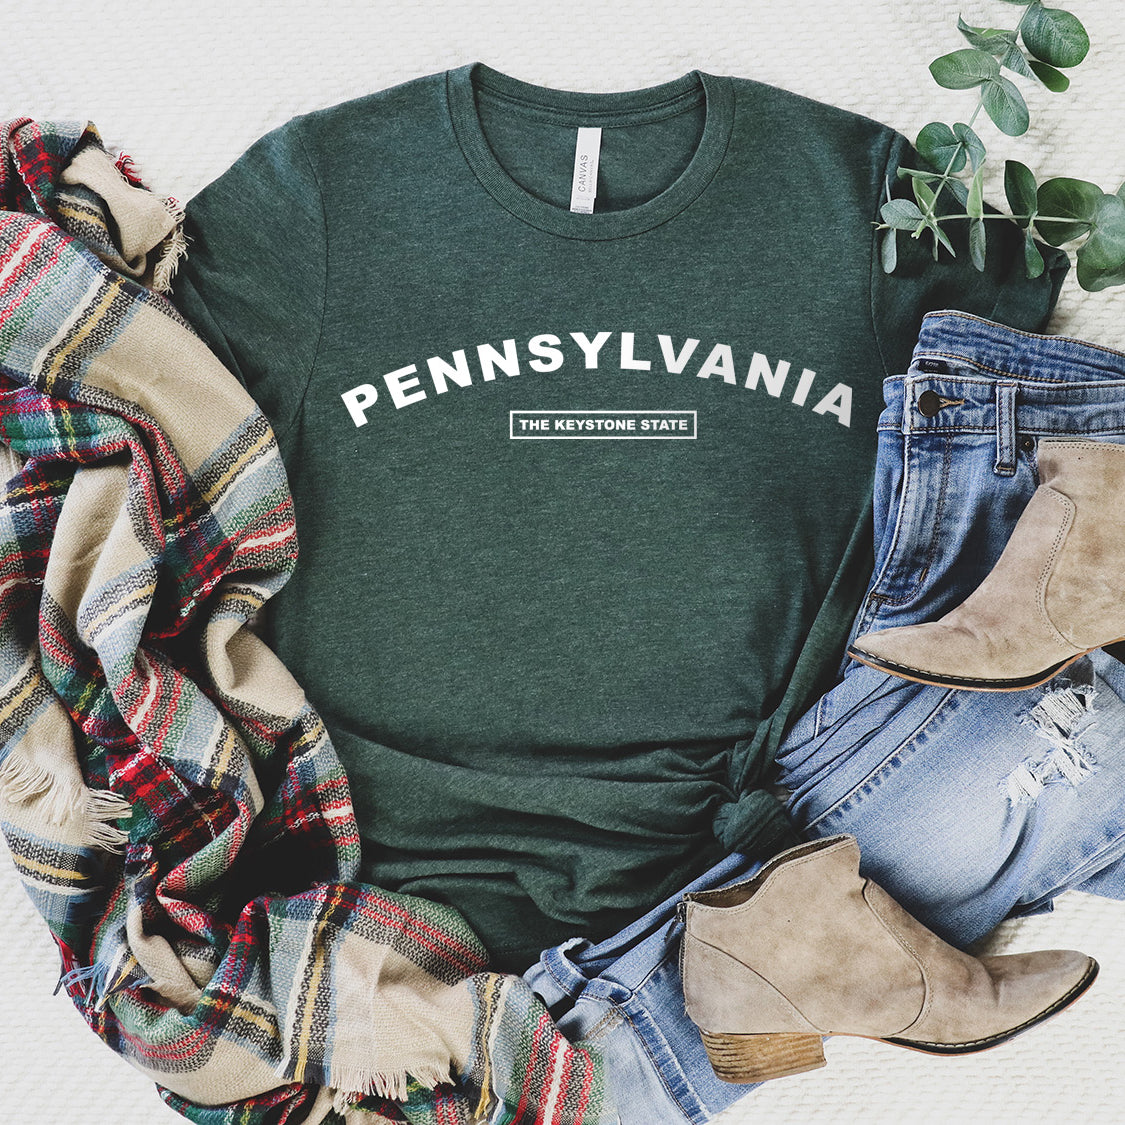 Pennsylvania The Keystone State T-shirt - United States Name & Slogan Minimal Design Printed Tee Shirt